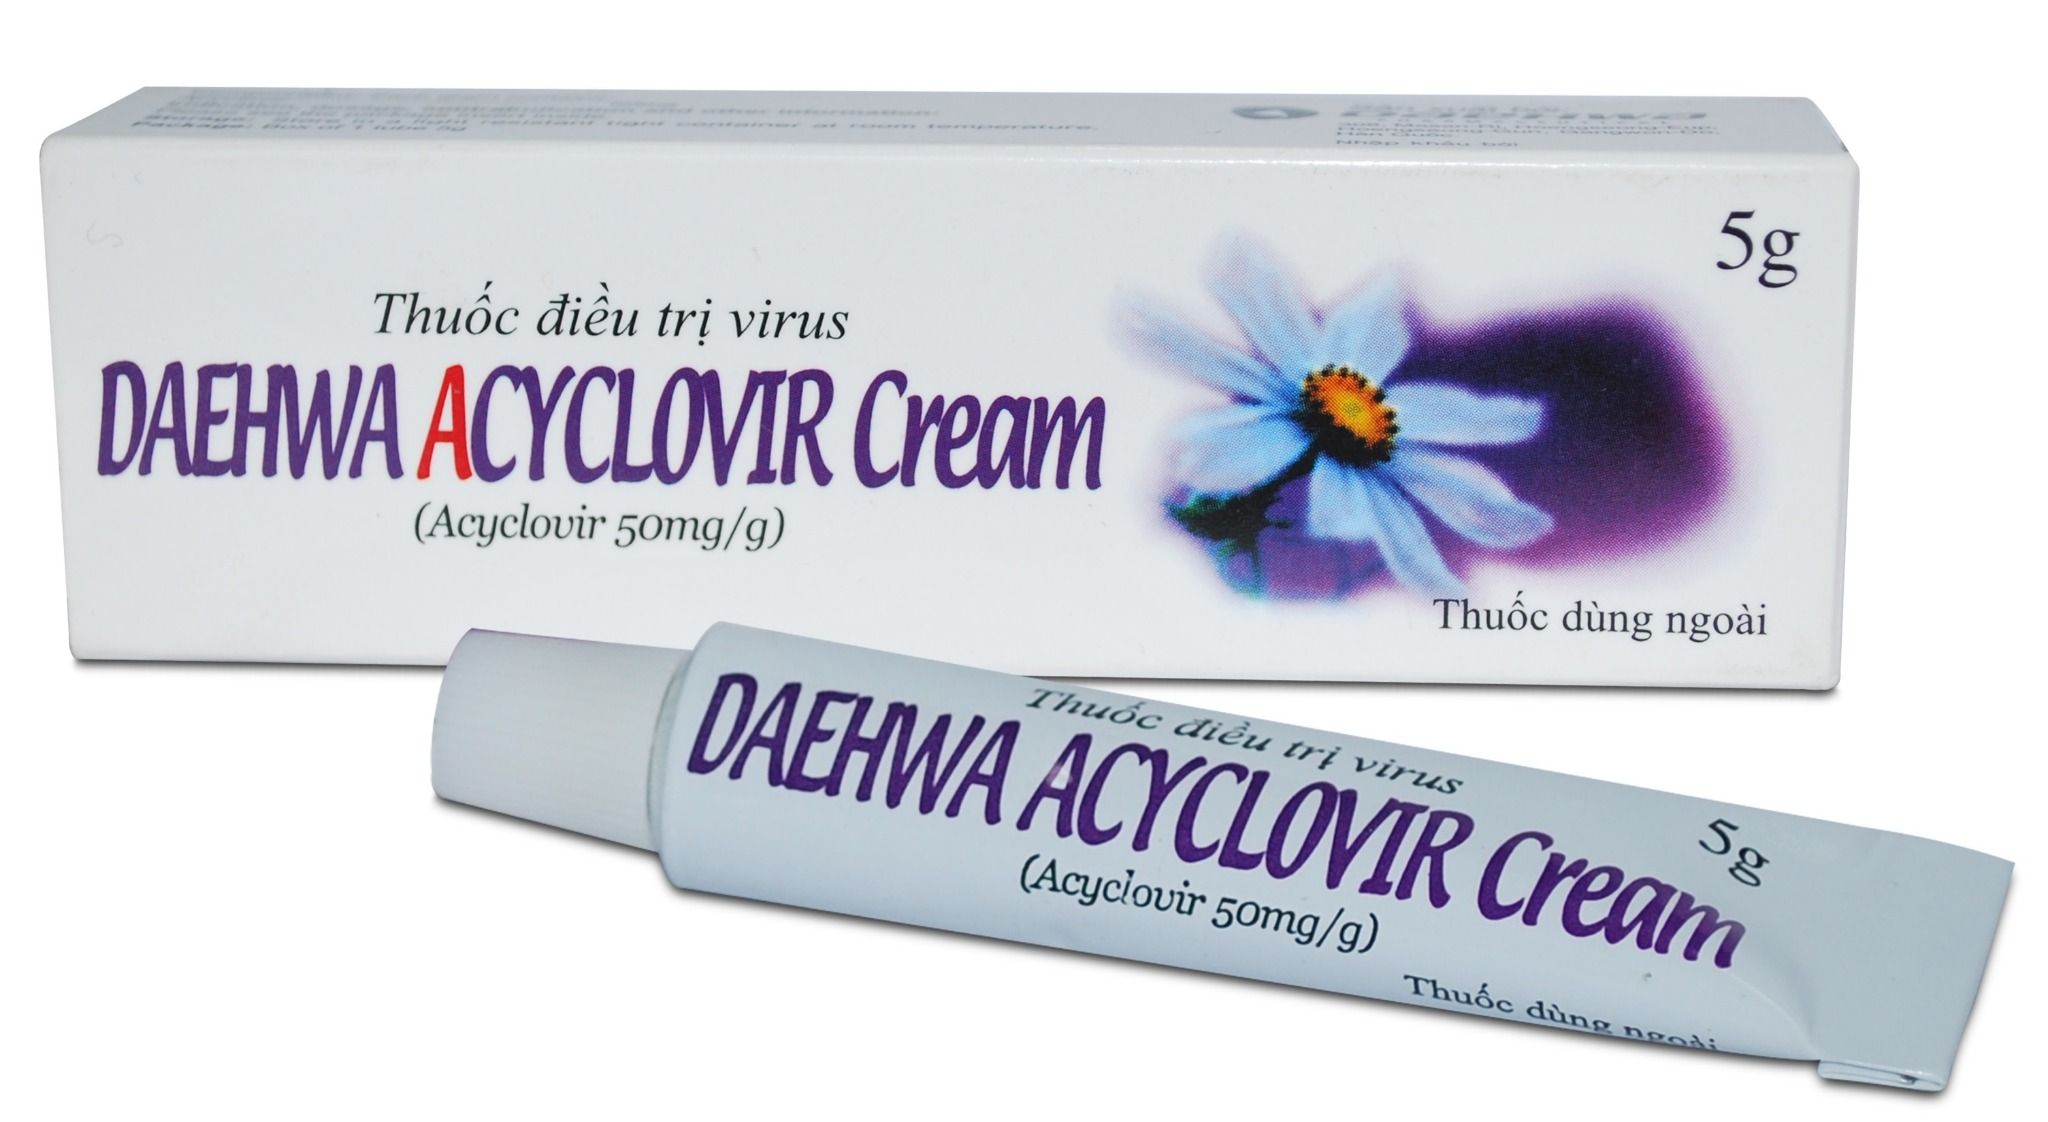  Daehwa Acyclovir cream chữa trị virus herpes simplex môi và sinh dục. 